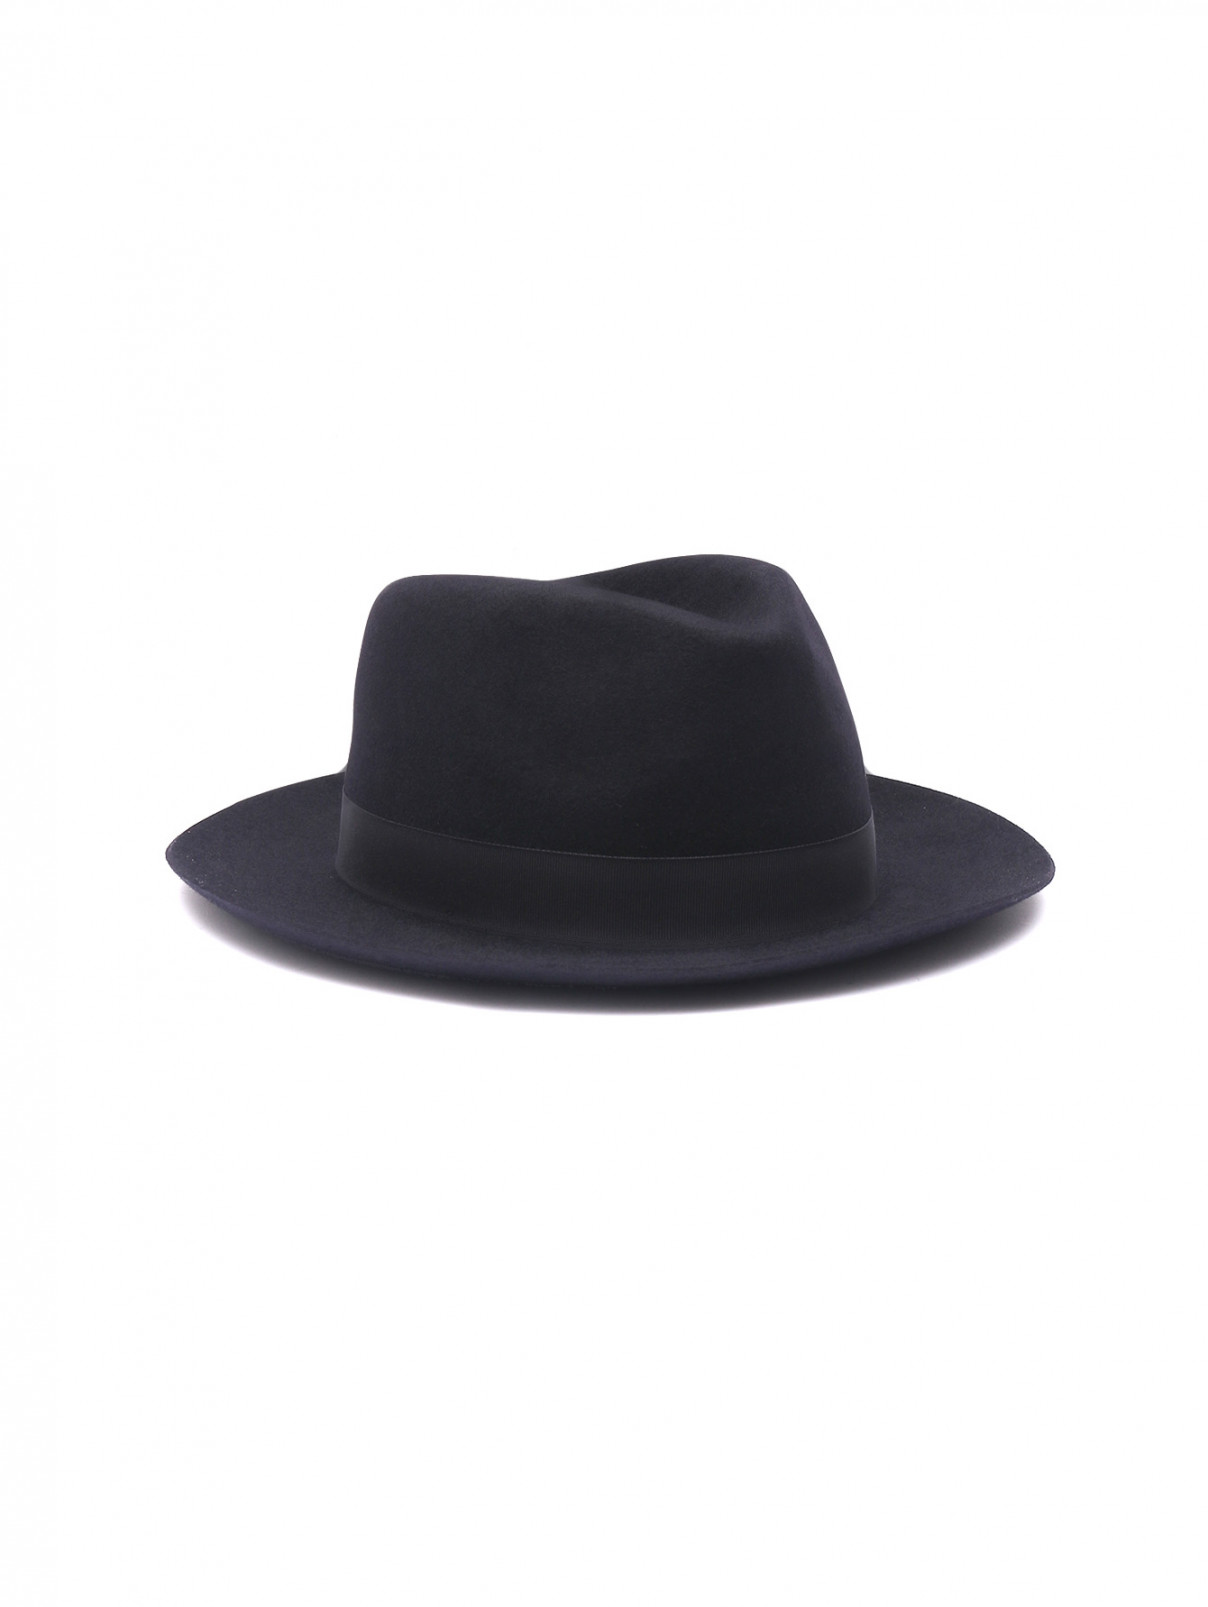 Шляпа из шерсти Stetson  –  Общий вид  – Цвет:  Синий